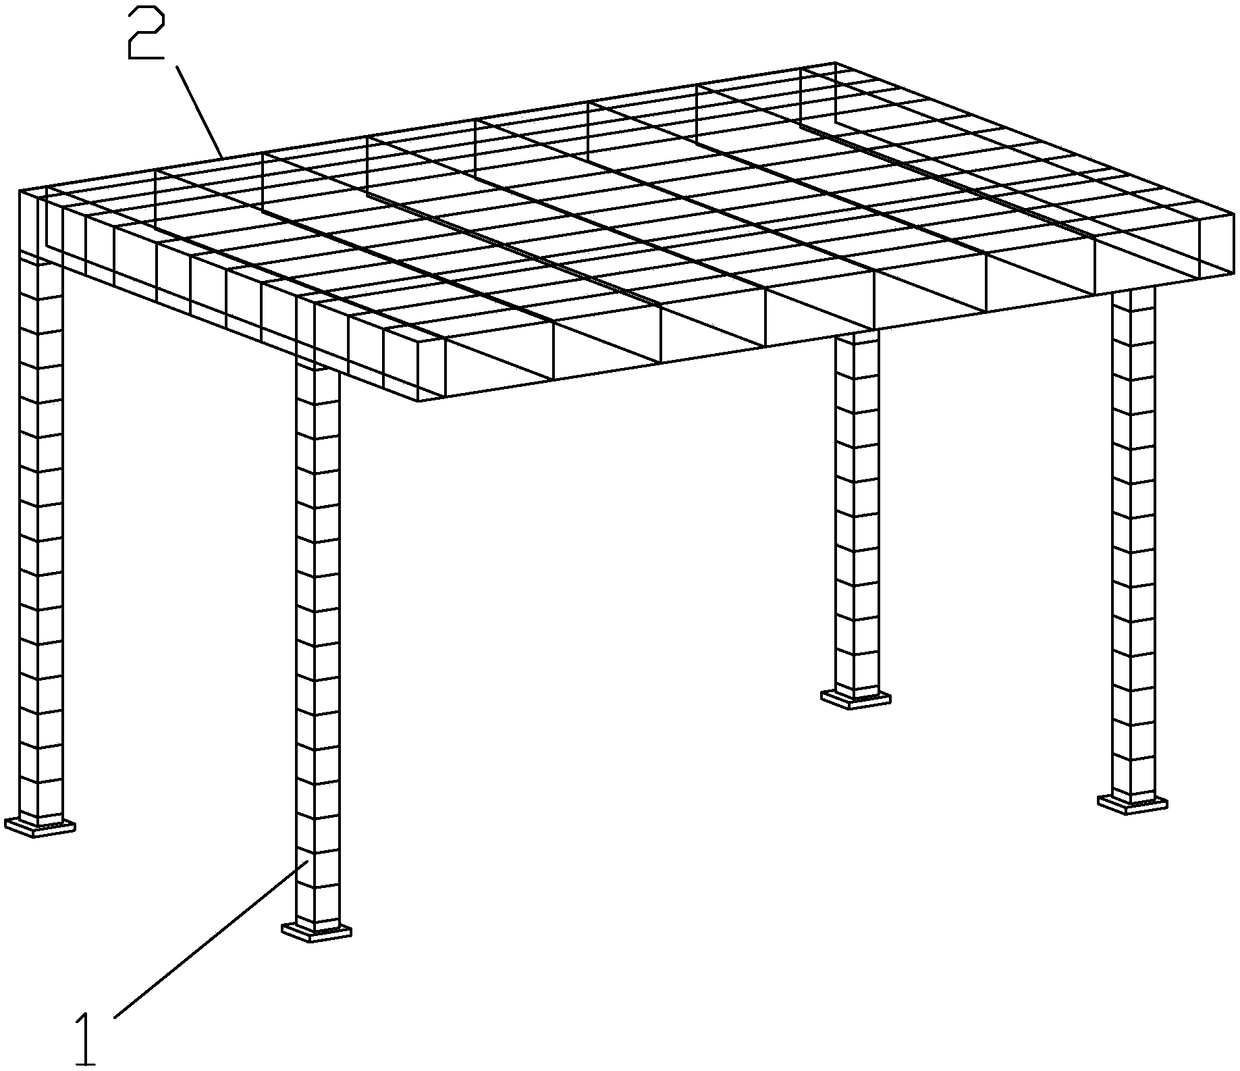 Steel structure roof framework